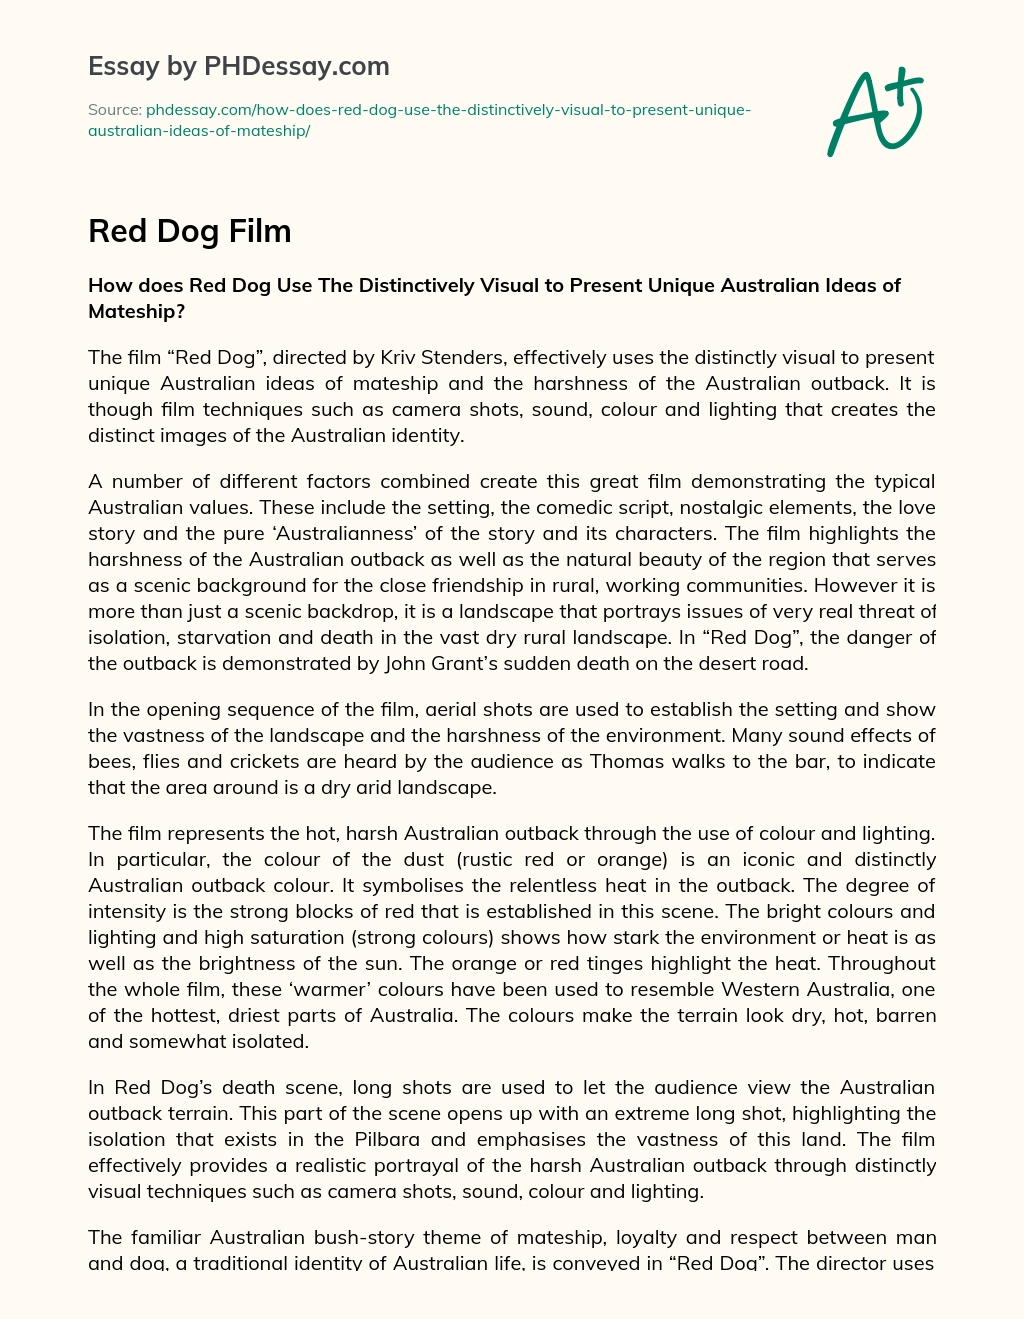 Red Dog Film essay